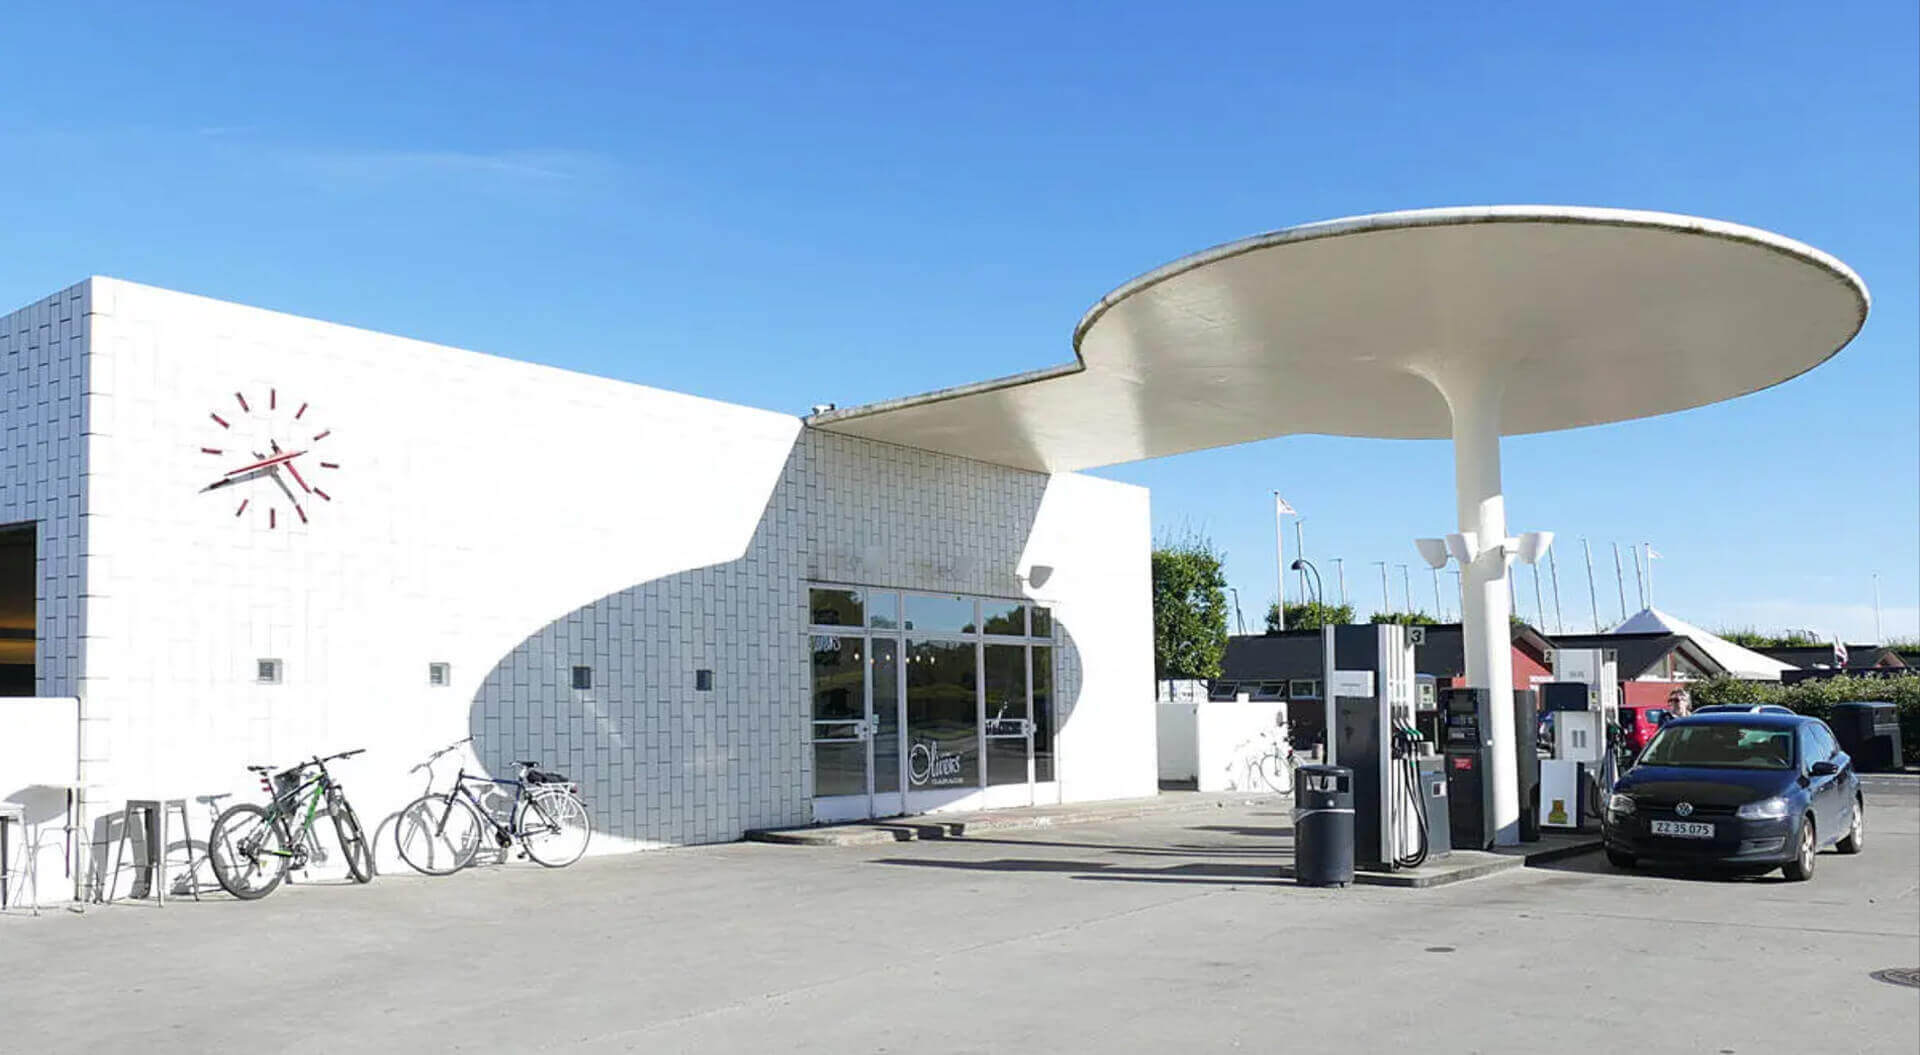 Texaco Petrol Station Benchmark Modernist Architecture, Arne Jacobsen, Copenhagen, 1937 - CampbellRigg Agency